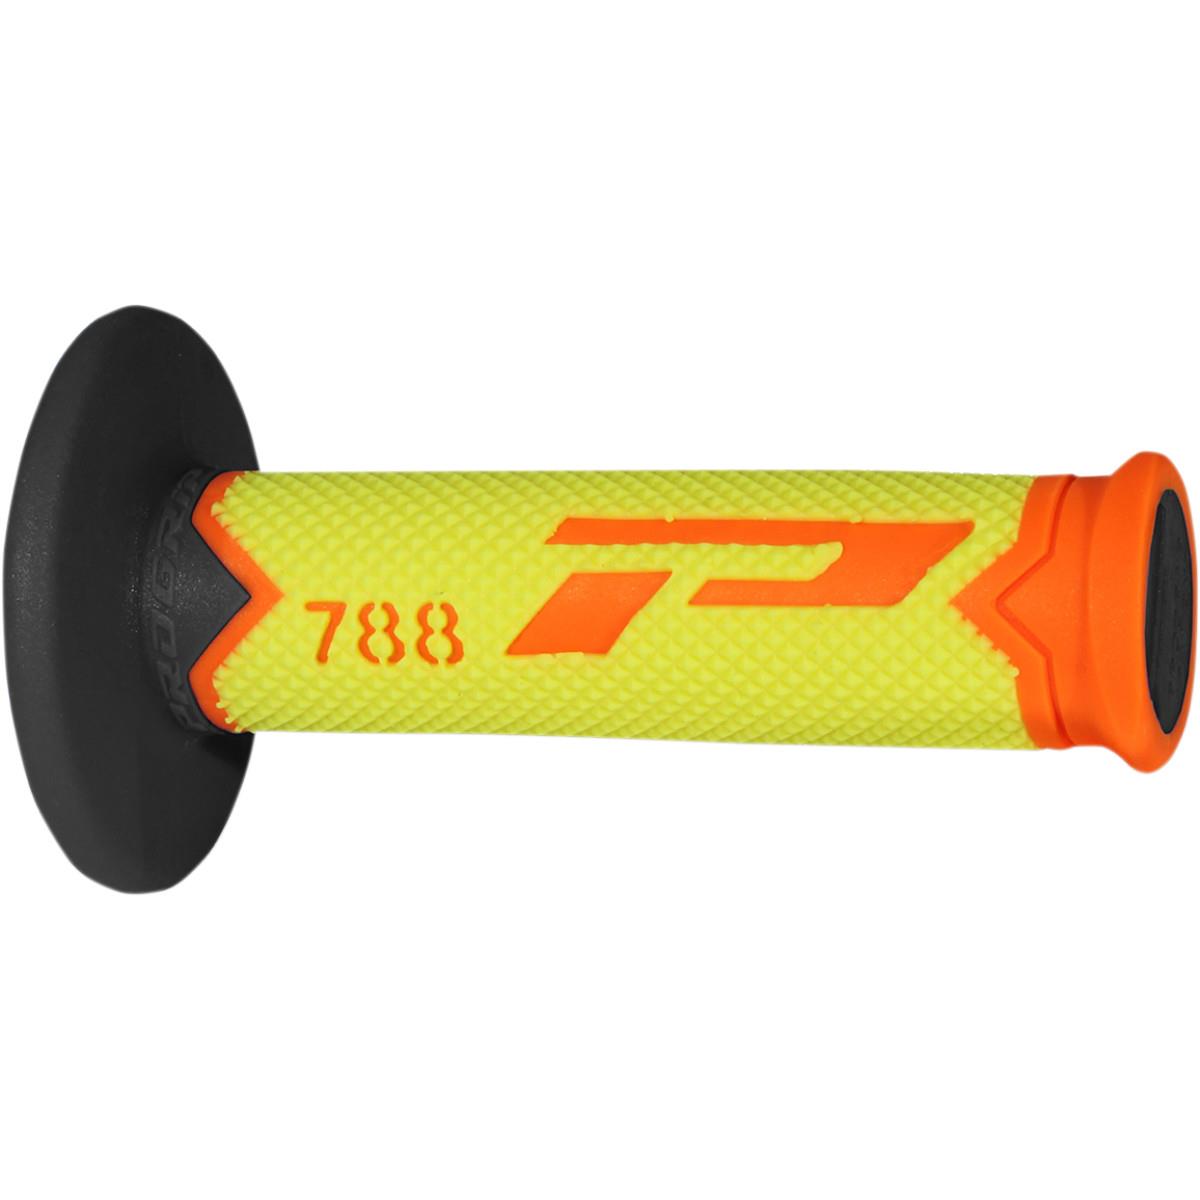 ProGrip Manopole 788 Fluo Orange/Fluo Yellow/Black